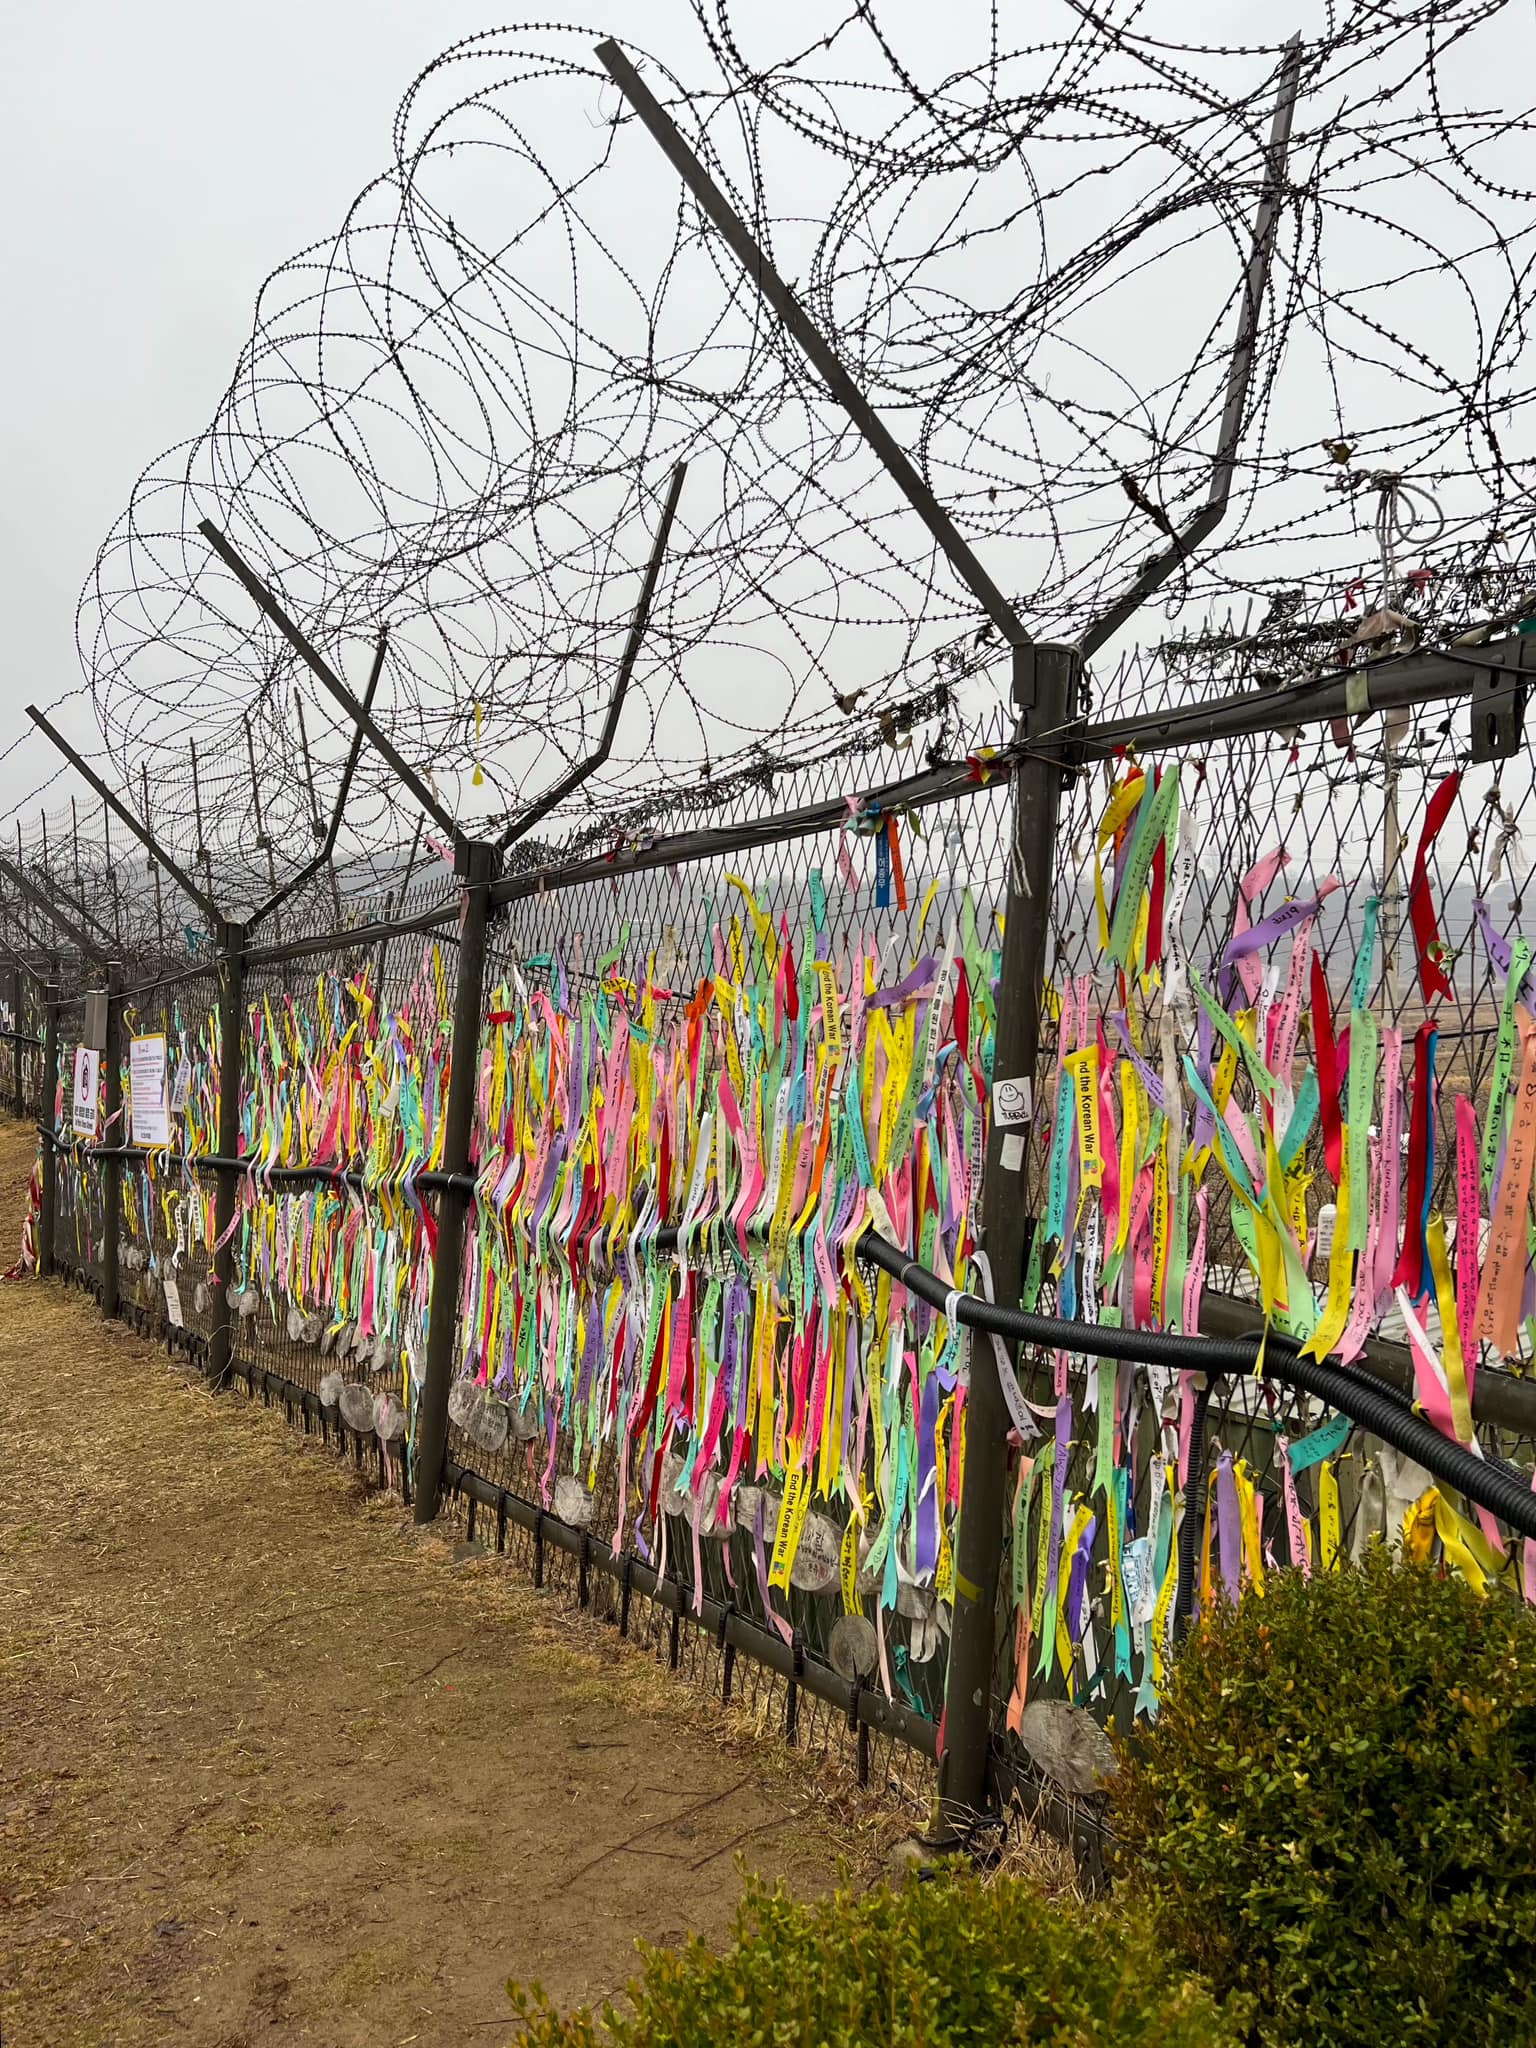 Korea Demilitarized Zone (DMZ)